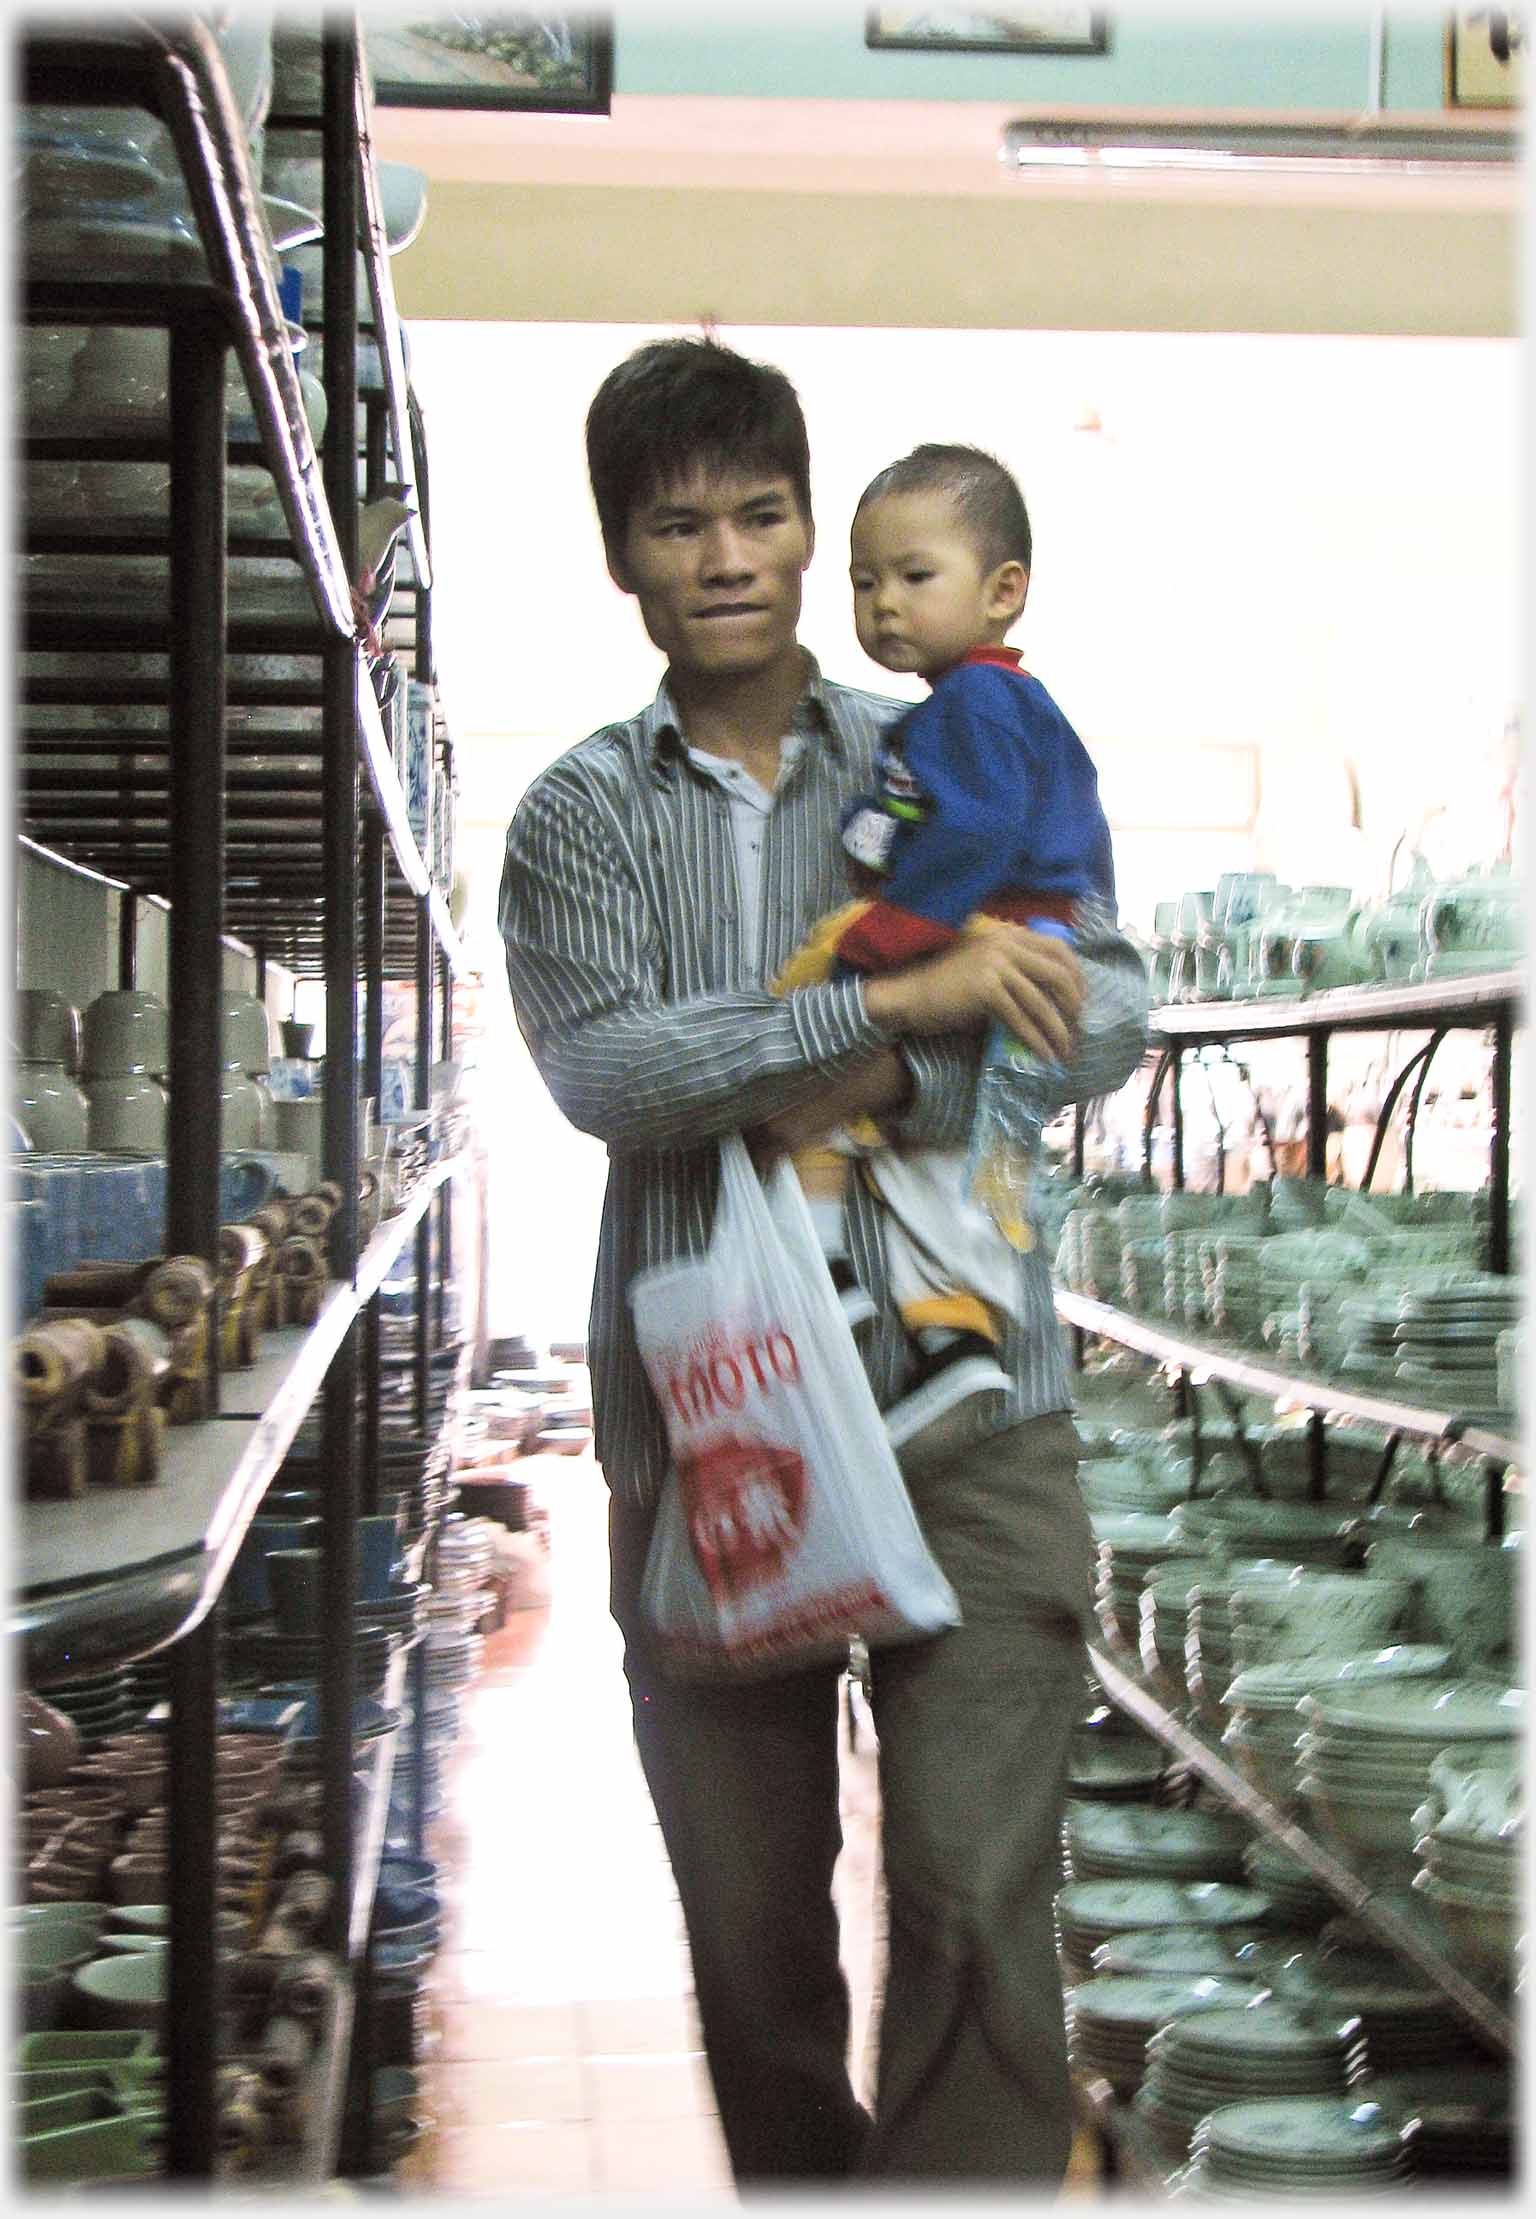 Man holding infant walking between shelves of ceramics.